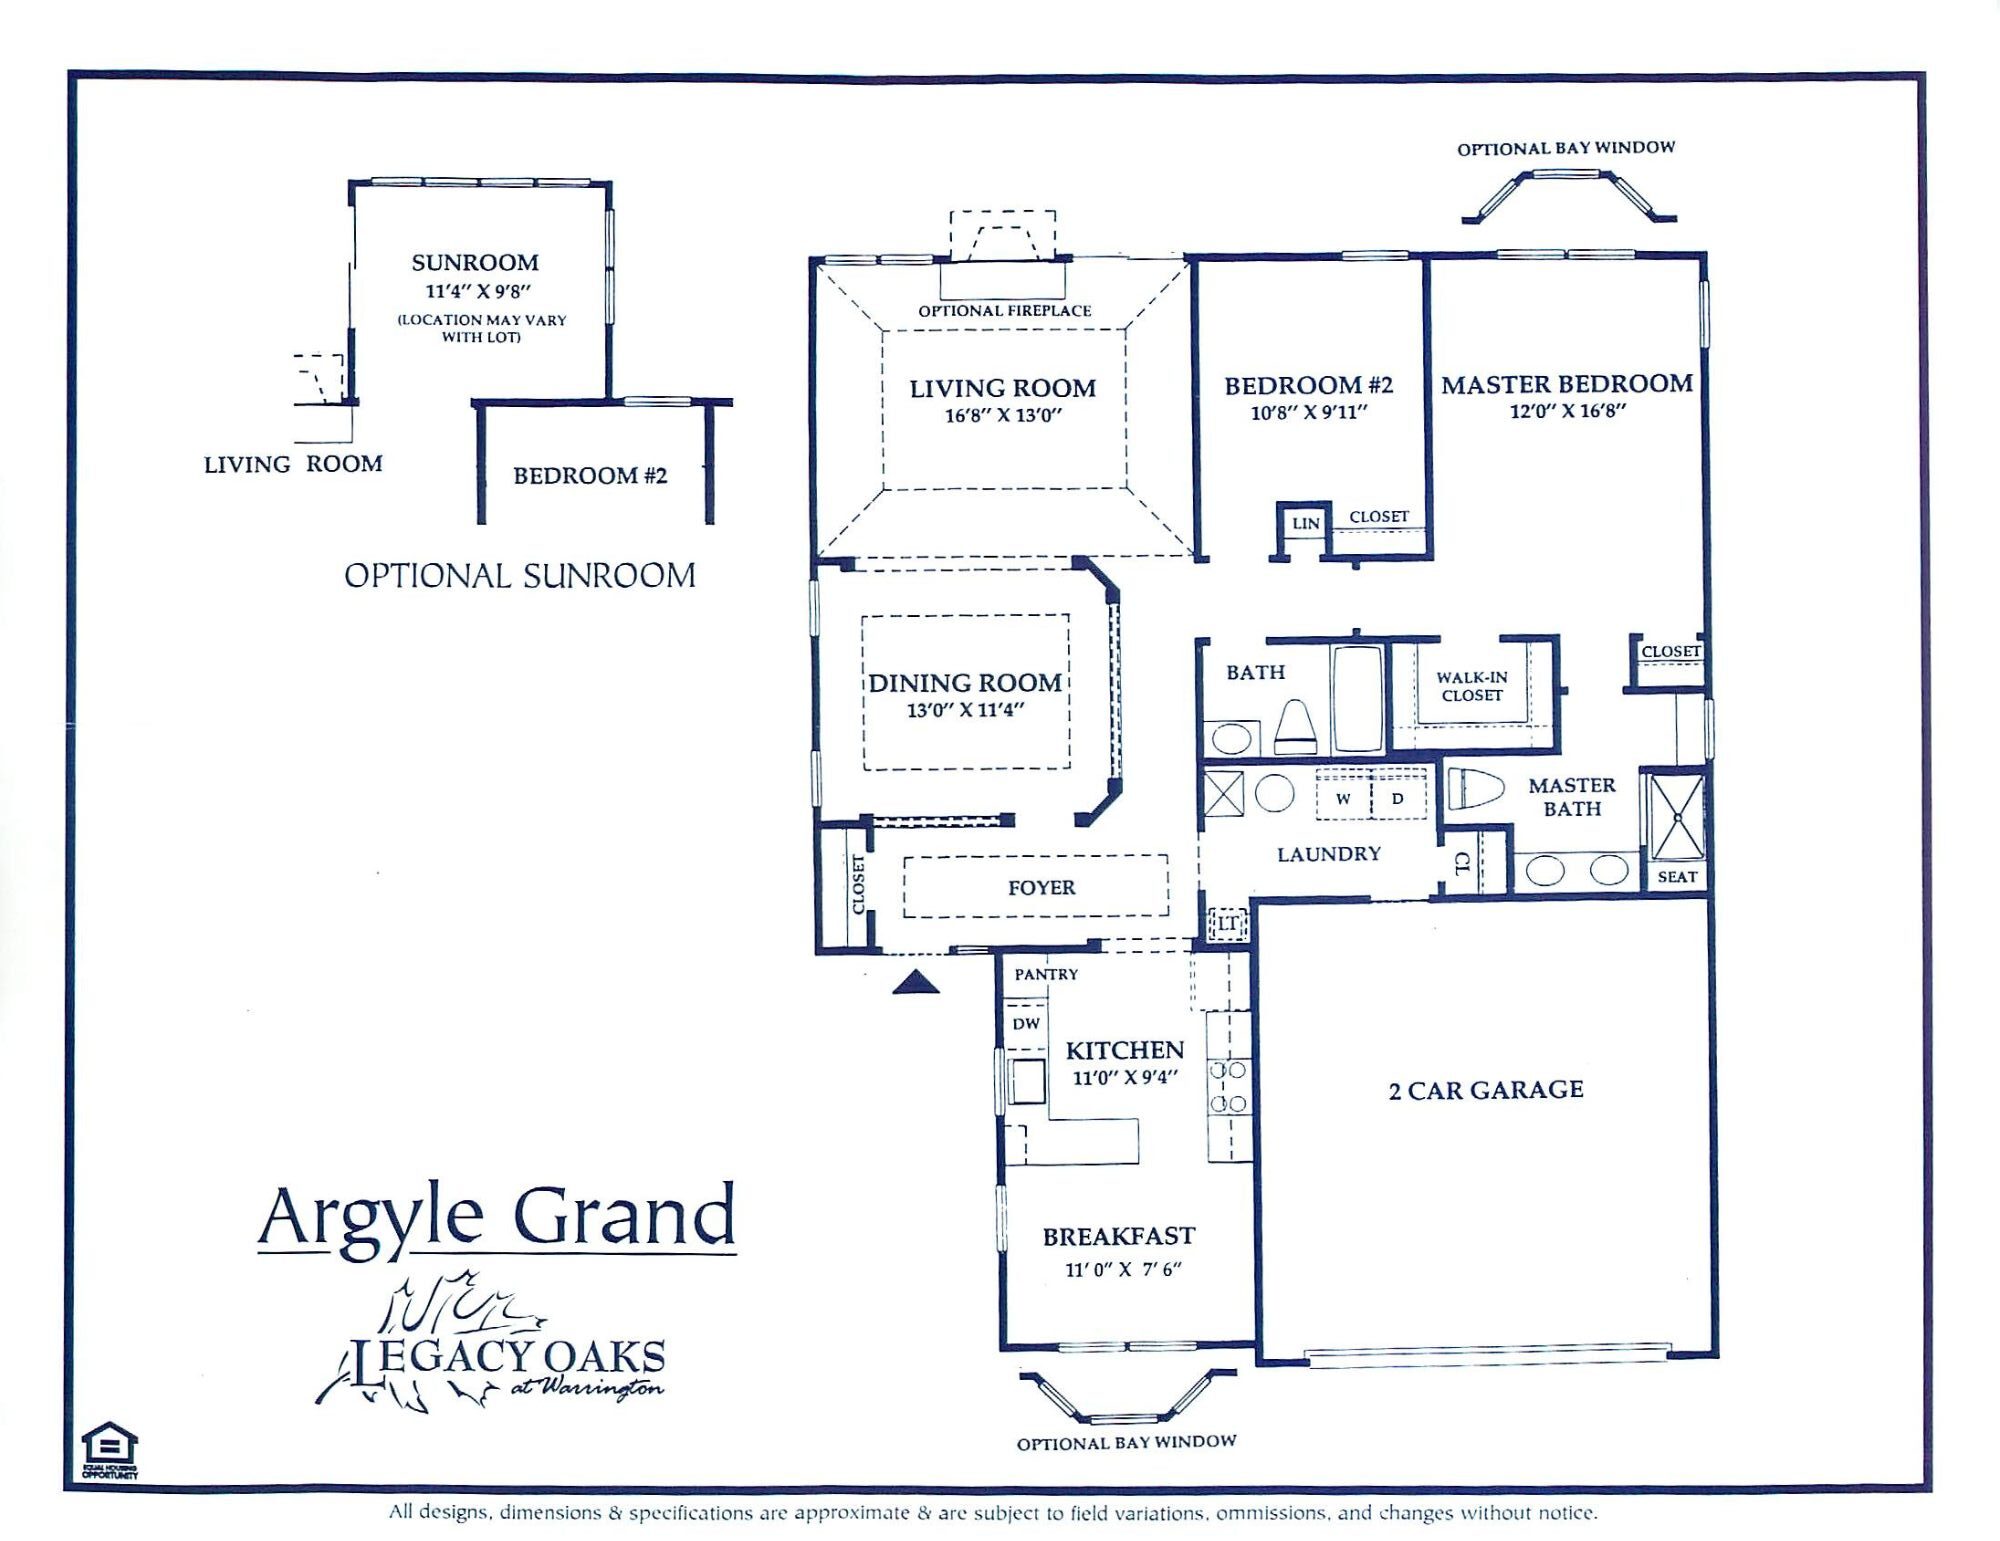 legacy oaks warrington argyle grand floor plan2A